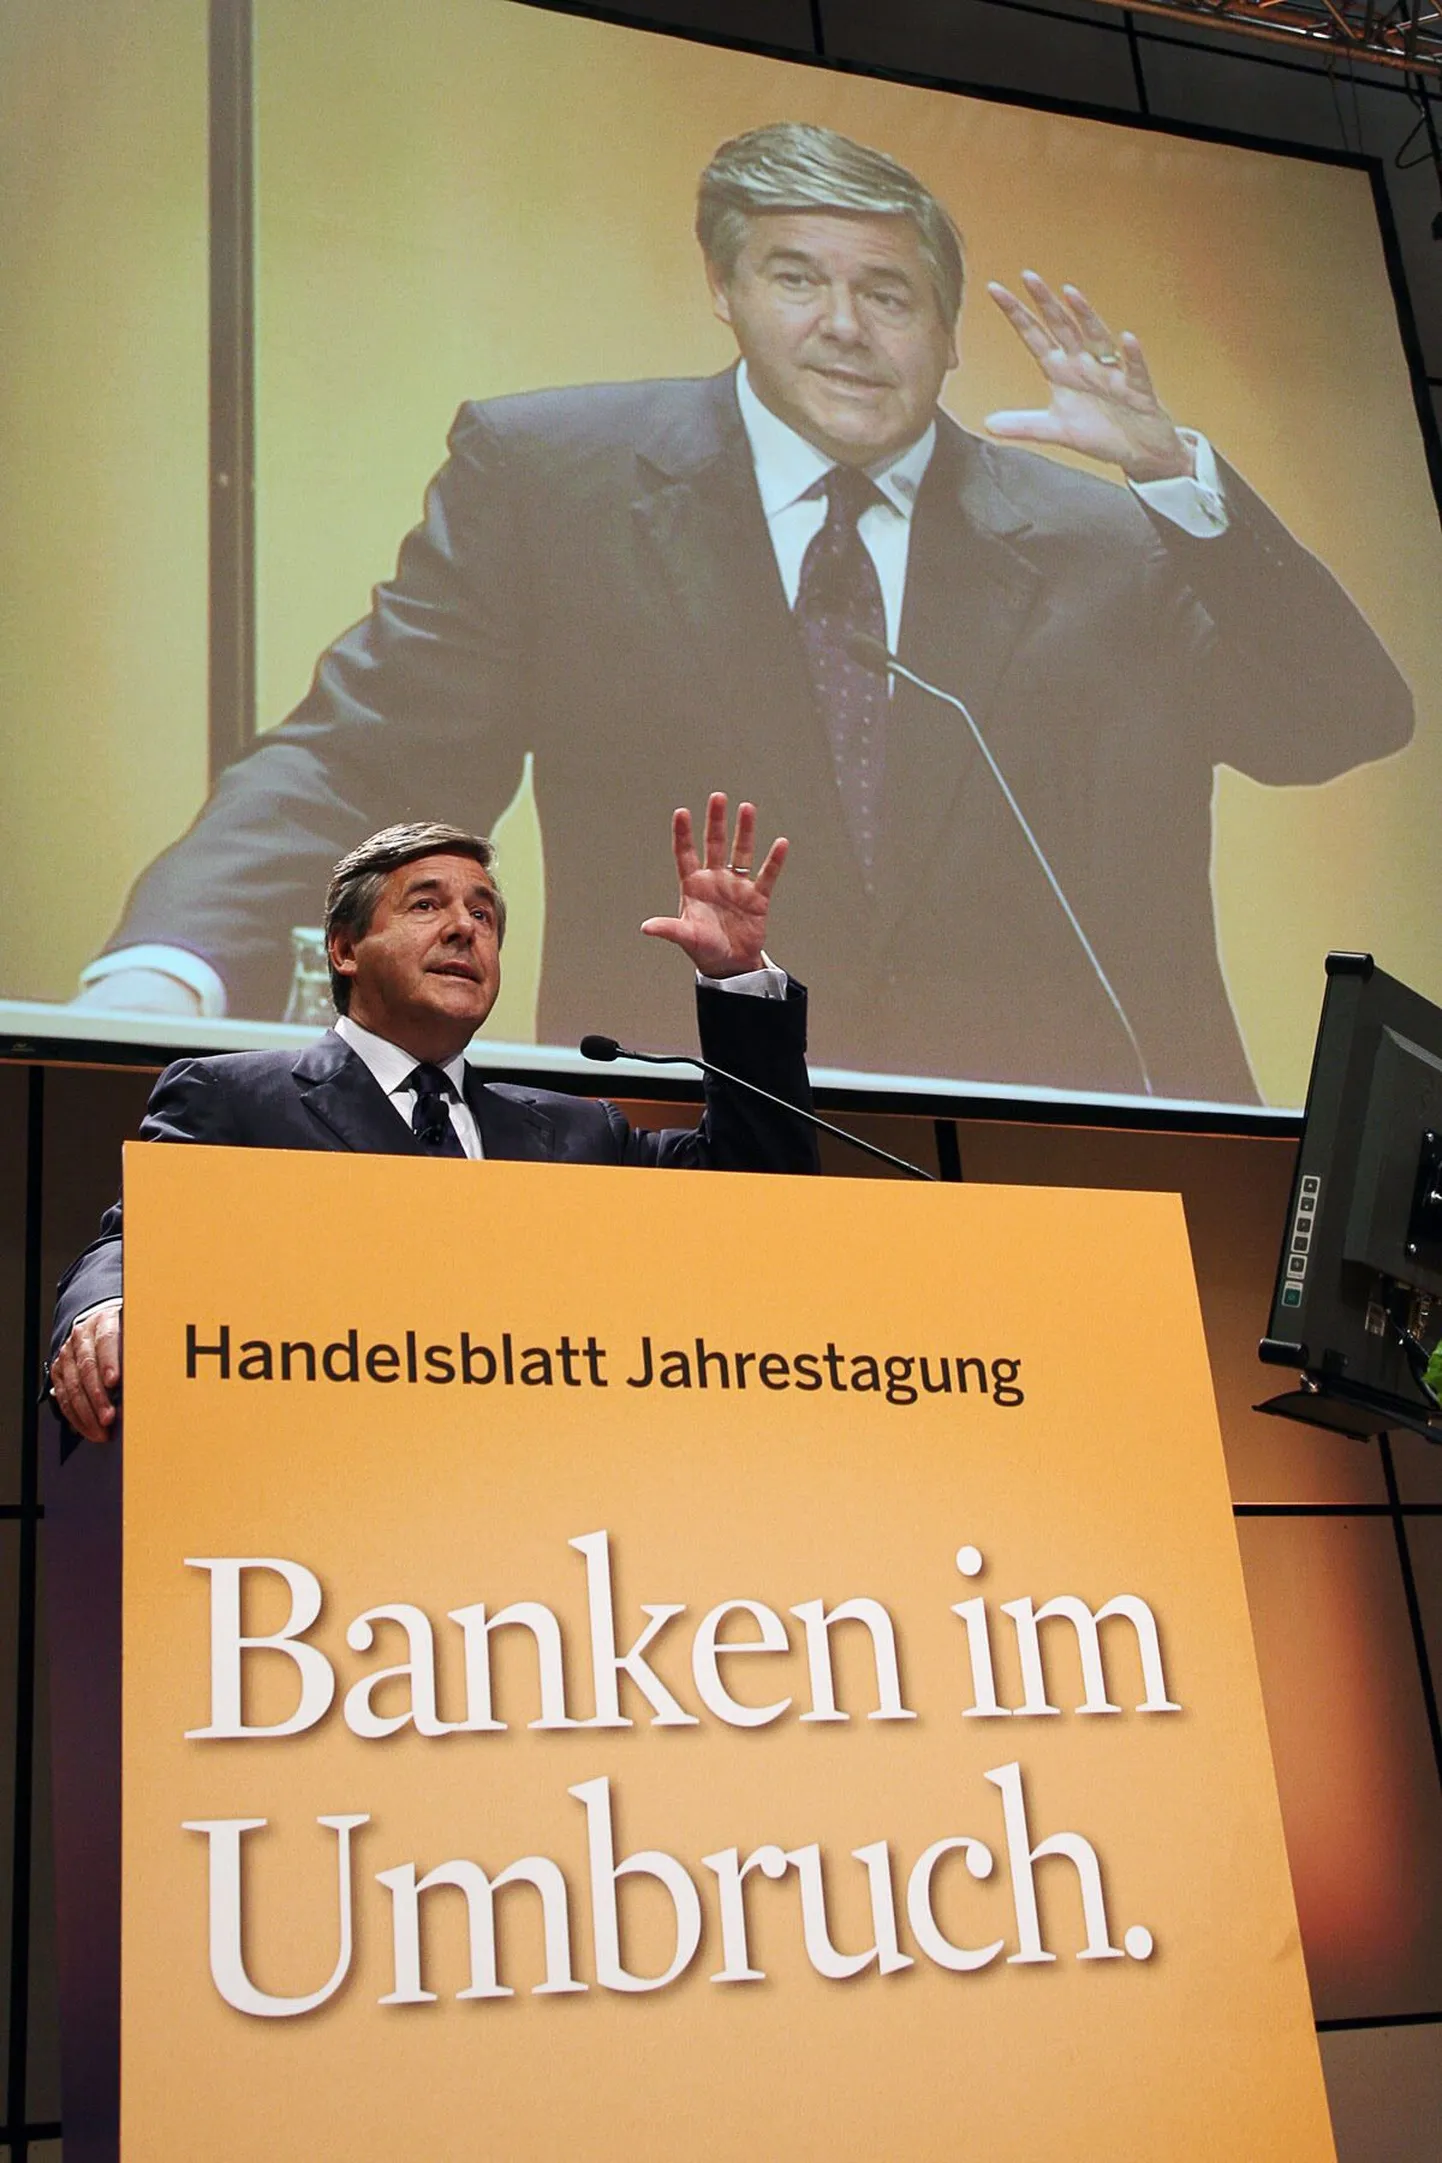 Deutsche Banki peadirektor Josef Ackermann